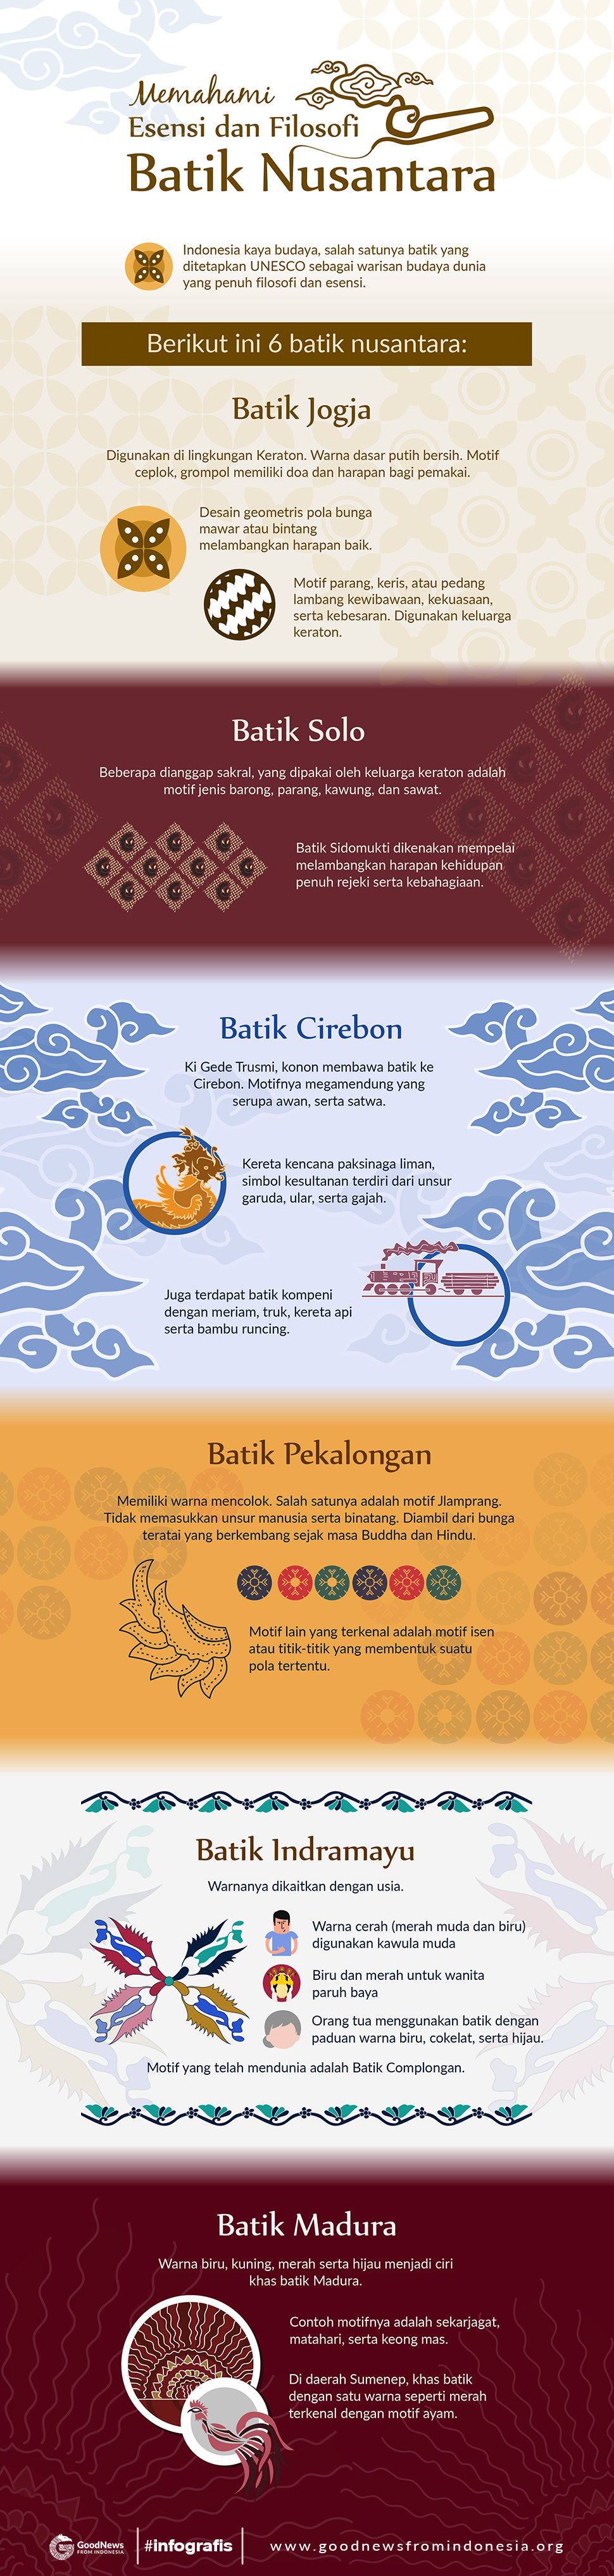 Memahami Esensi dan  Filosofi Batik  Nusantara  Good News 